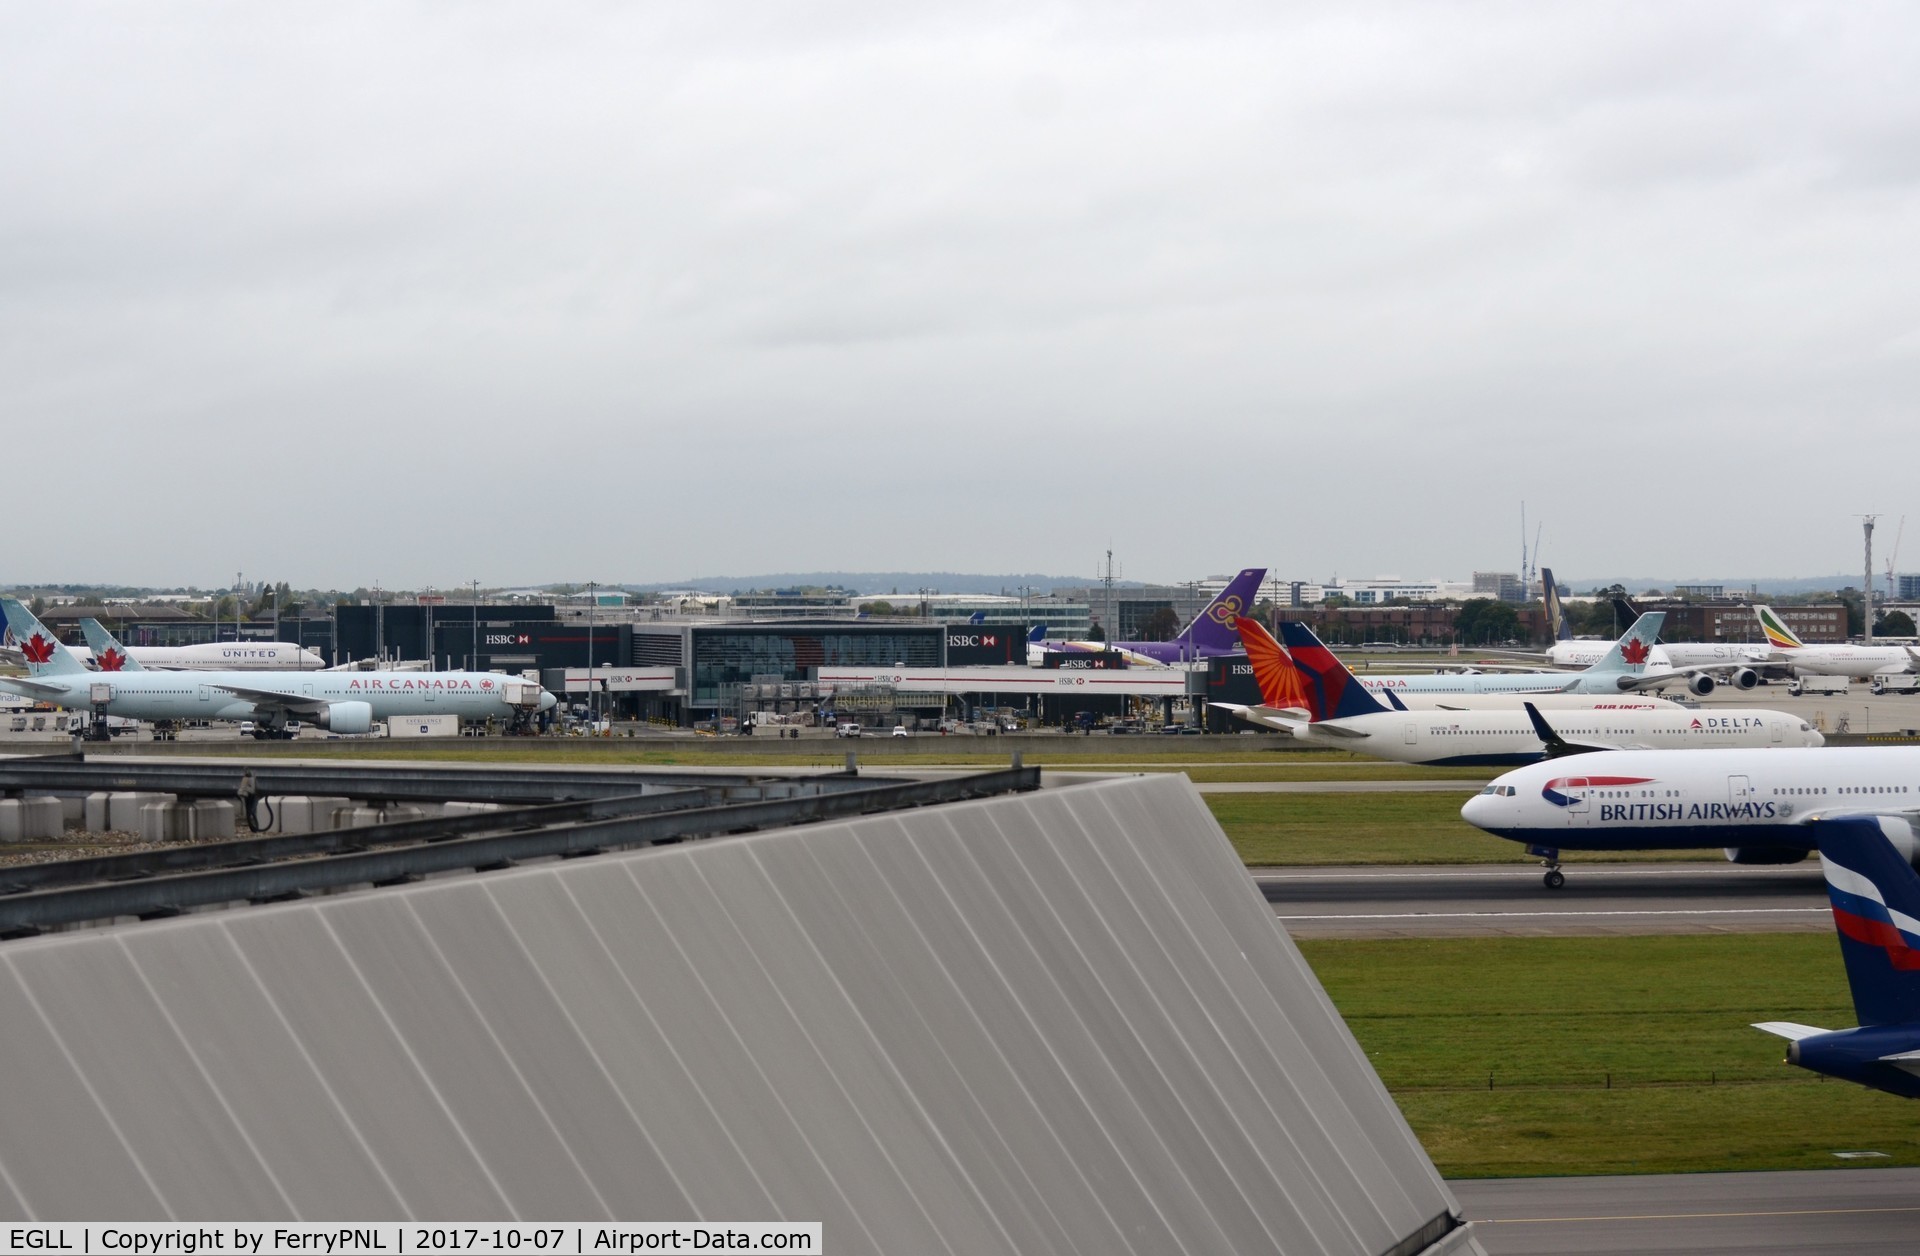 London Heathrow Airport, London, England United Kingdom (EGLL) - Heathrow Terminal 2 seen from T4